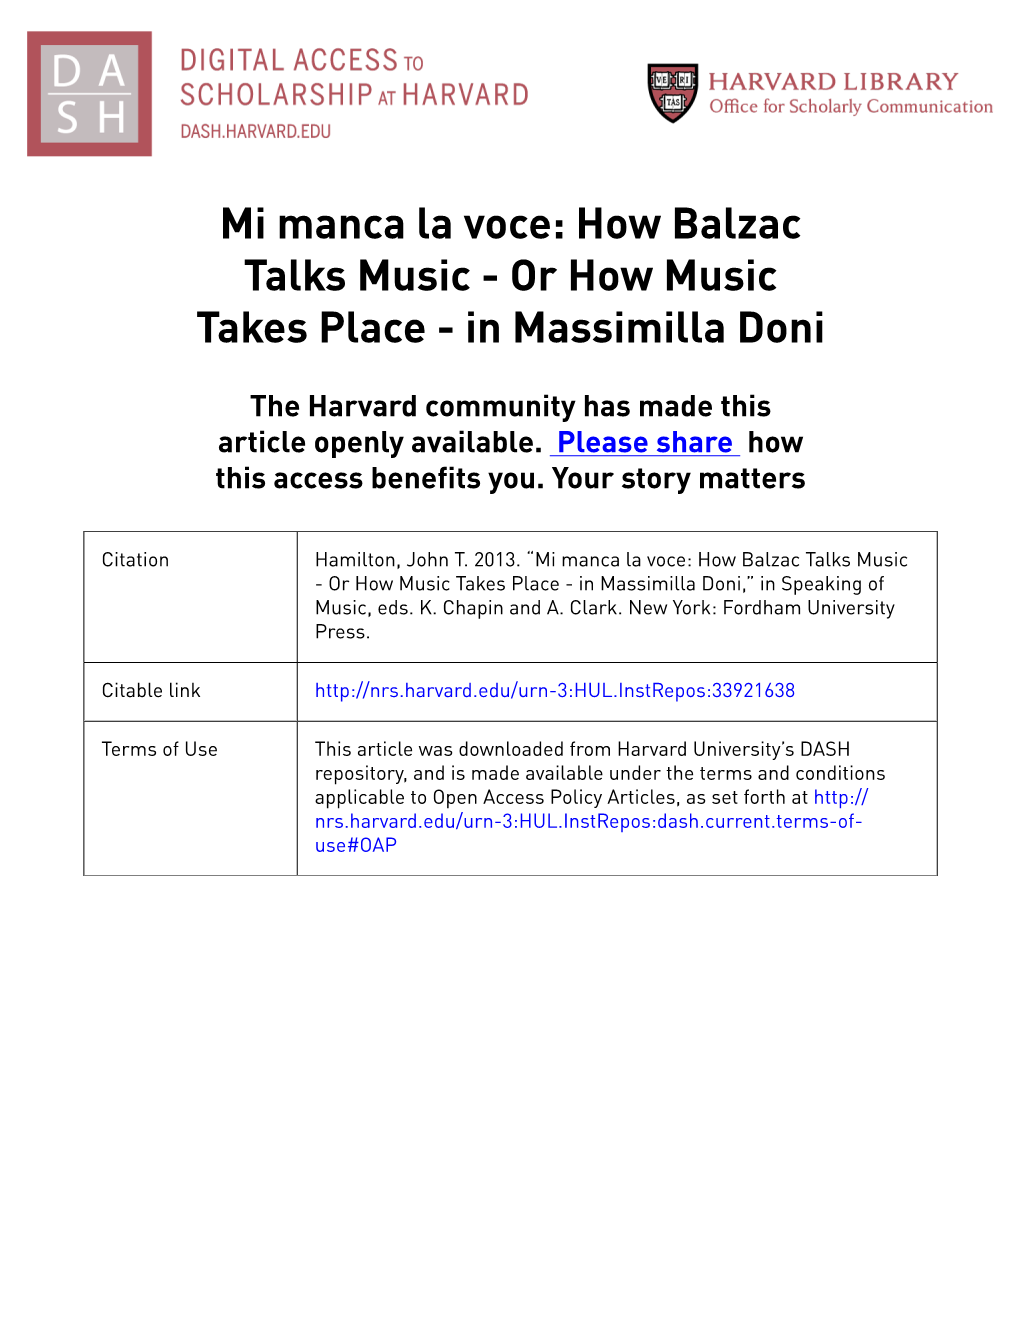 Mi Manca La Voce: How Balzac Talks Music - Or How Music Takes Place - in Massimilla Doni